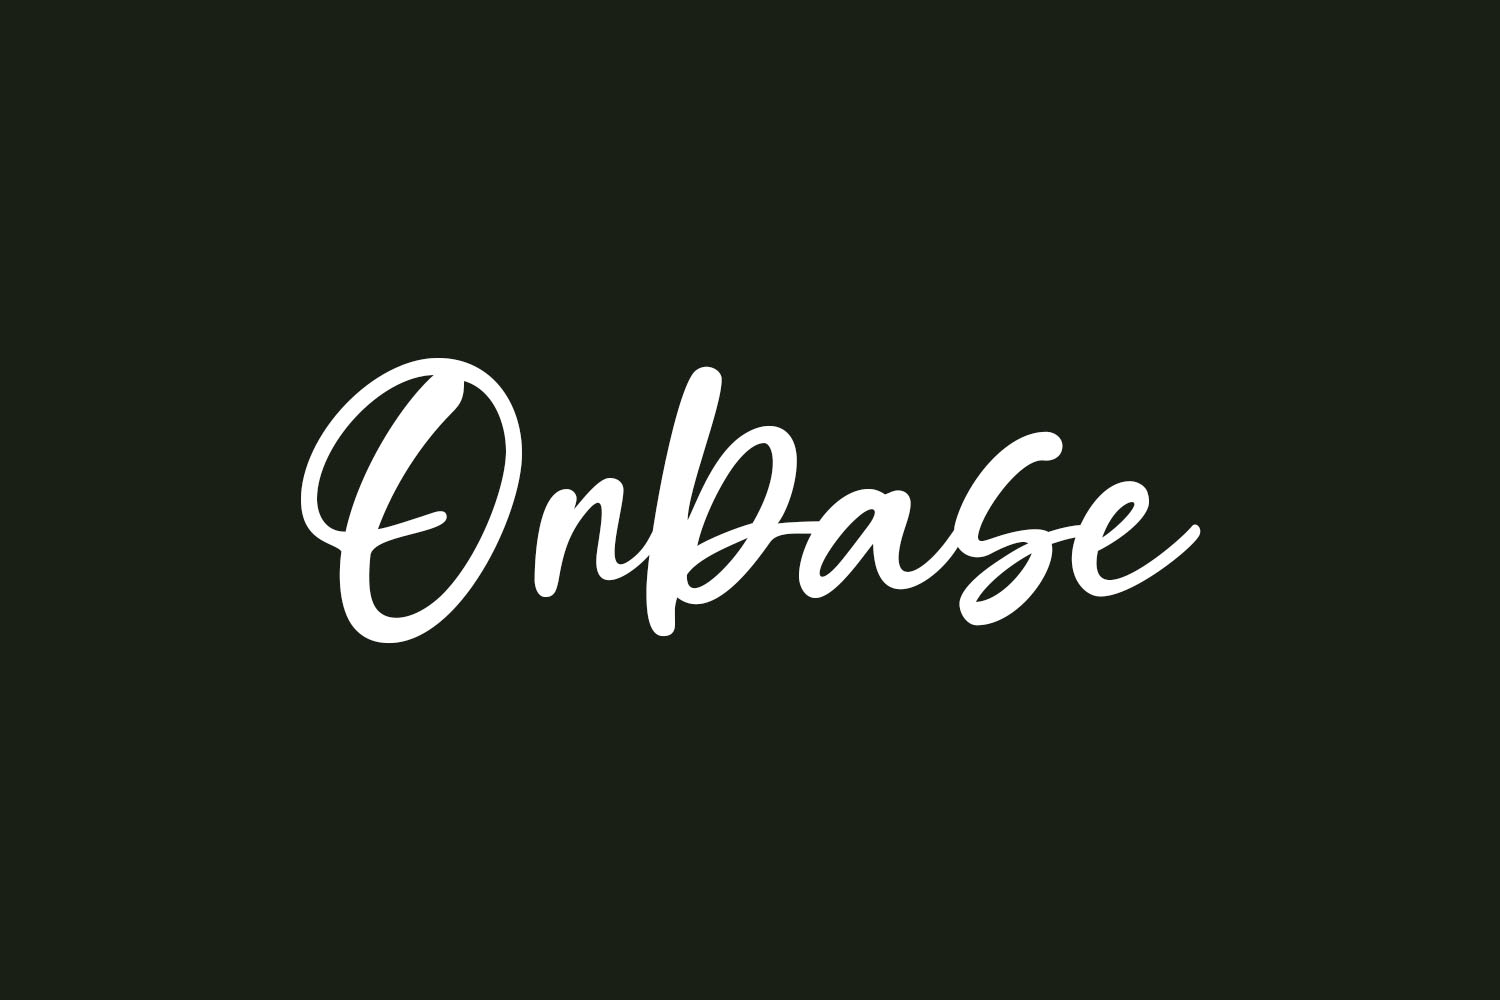 Onbase Free Font